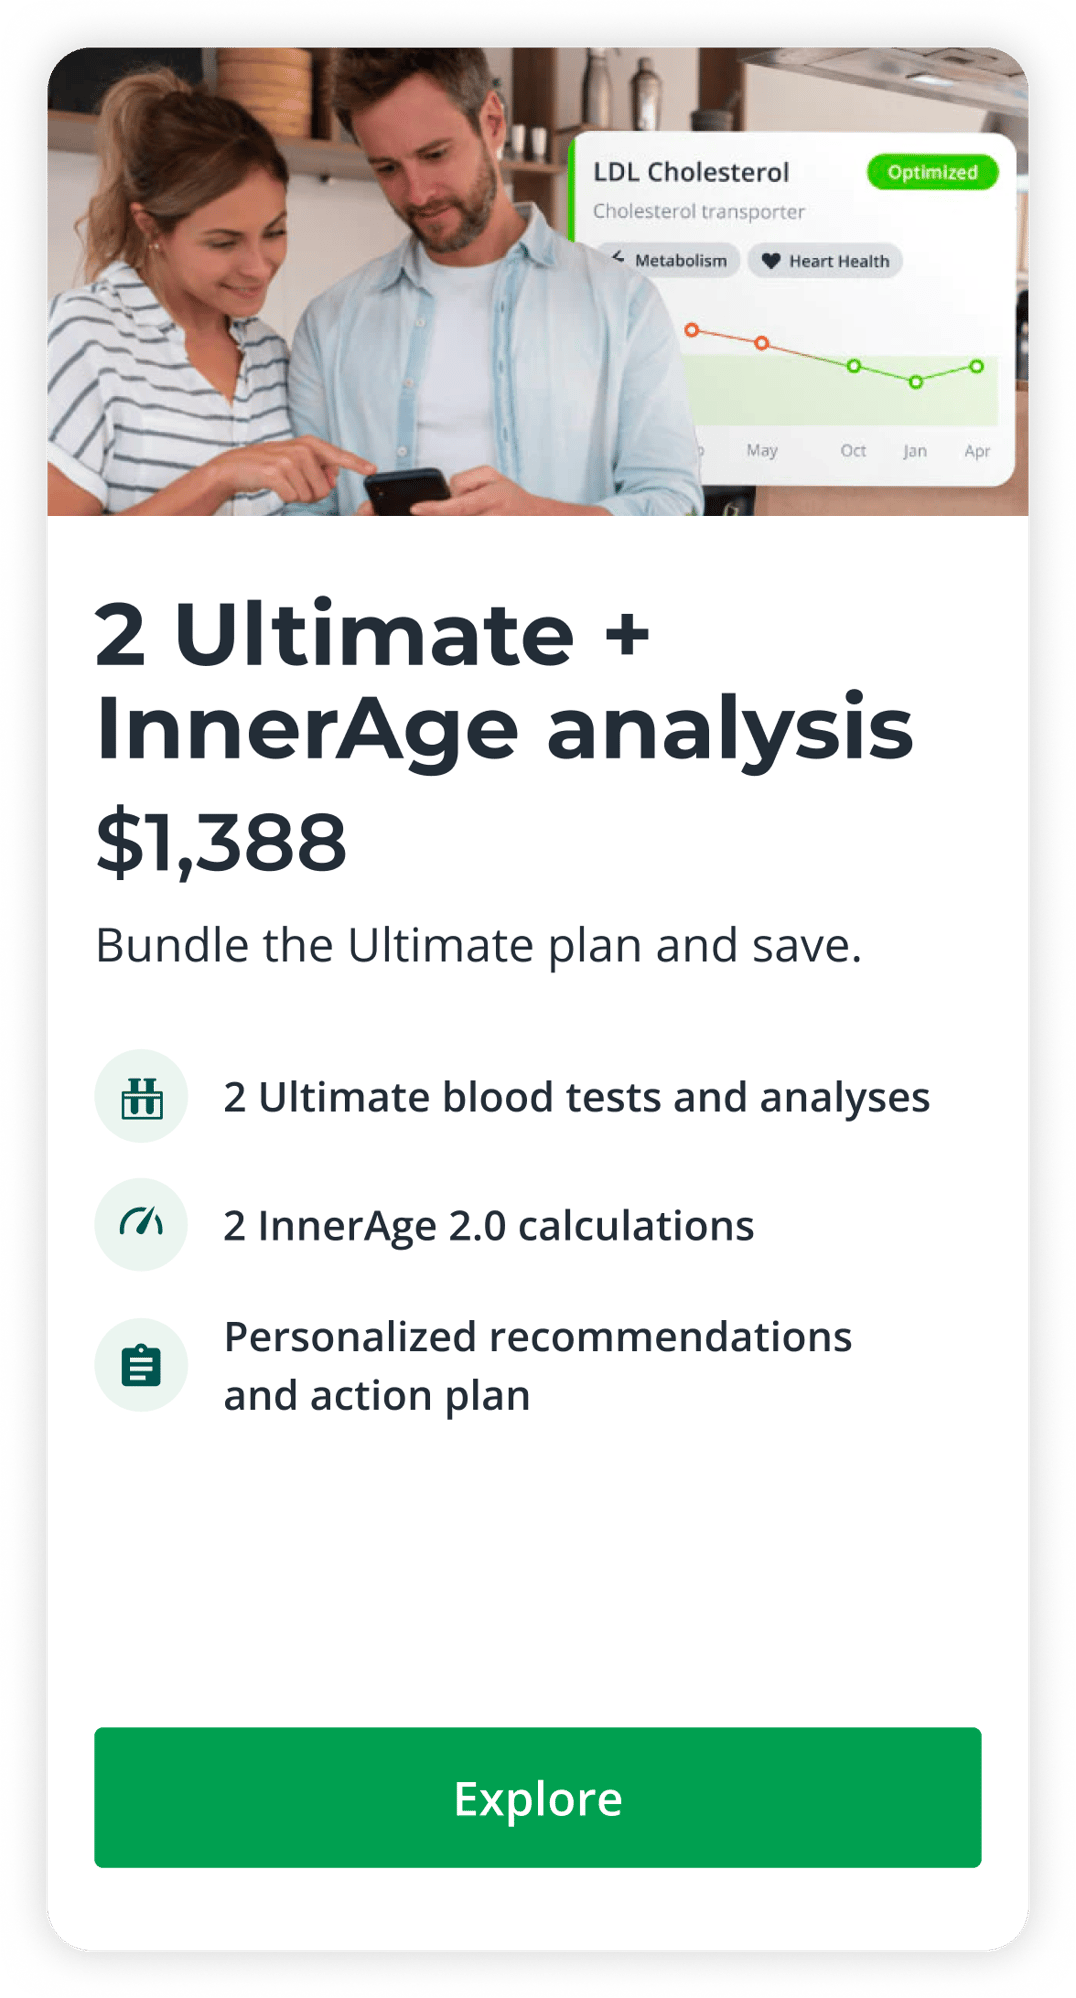 2 Ultimate + InnerAge analysis